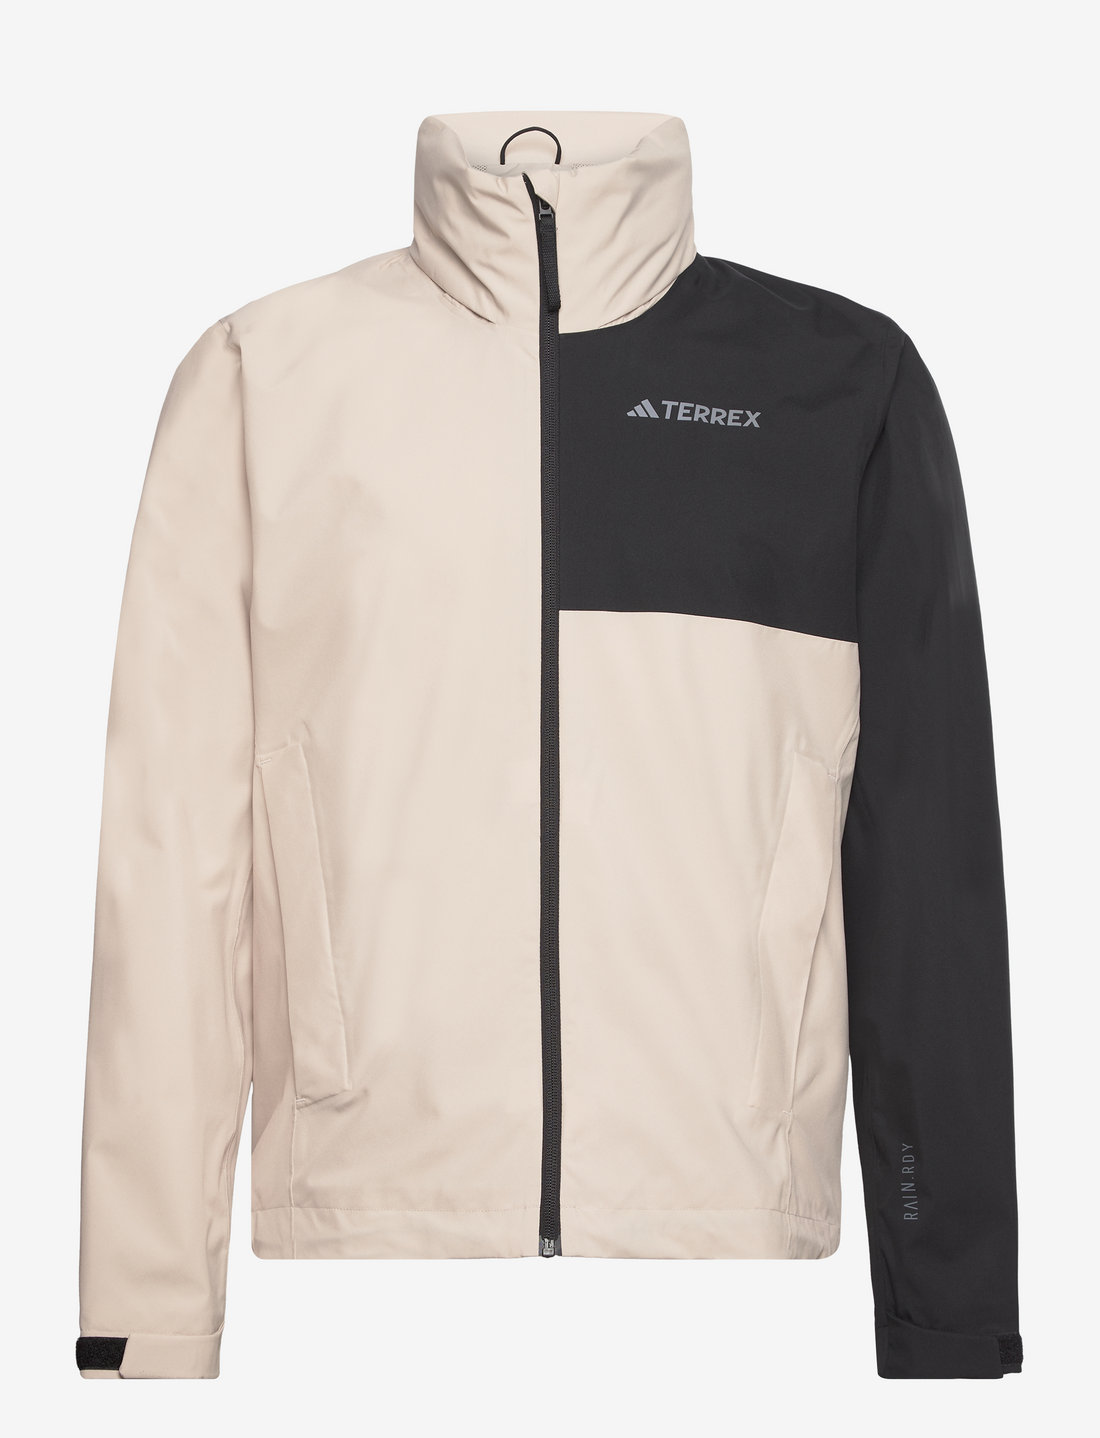 Jacket Terrex Rain – Terrex jacken einkaufen adidas Multi 2-layer – bei & mäntel Rain.rdy Booztlet